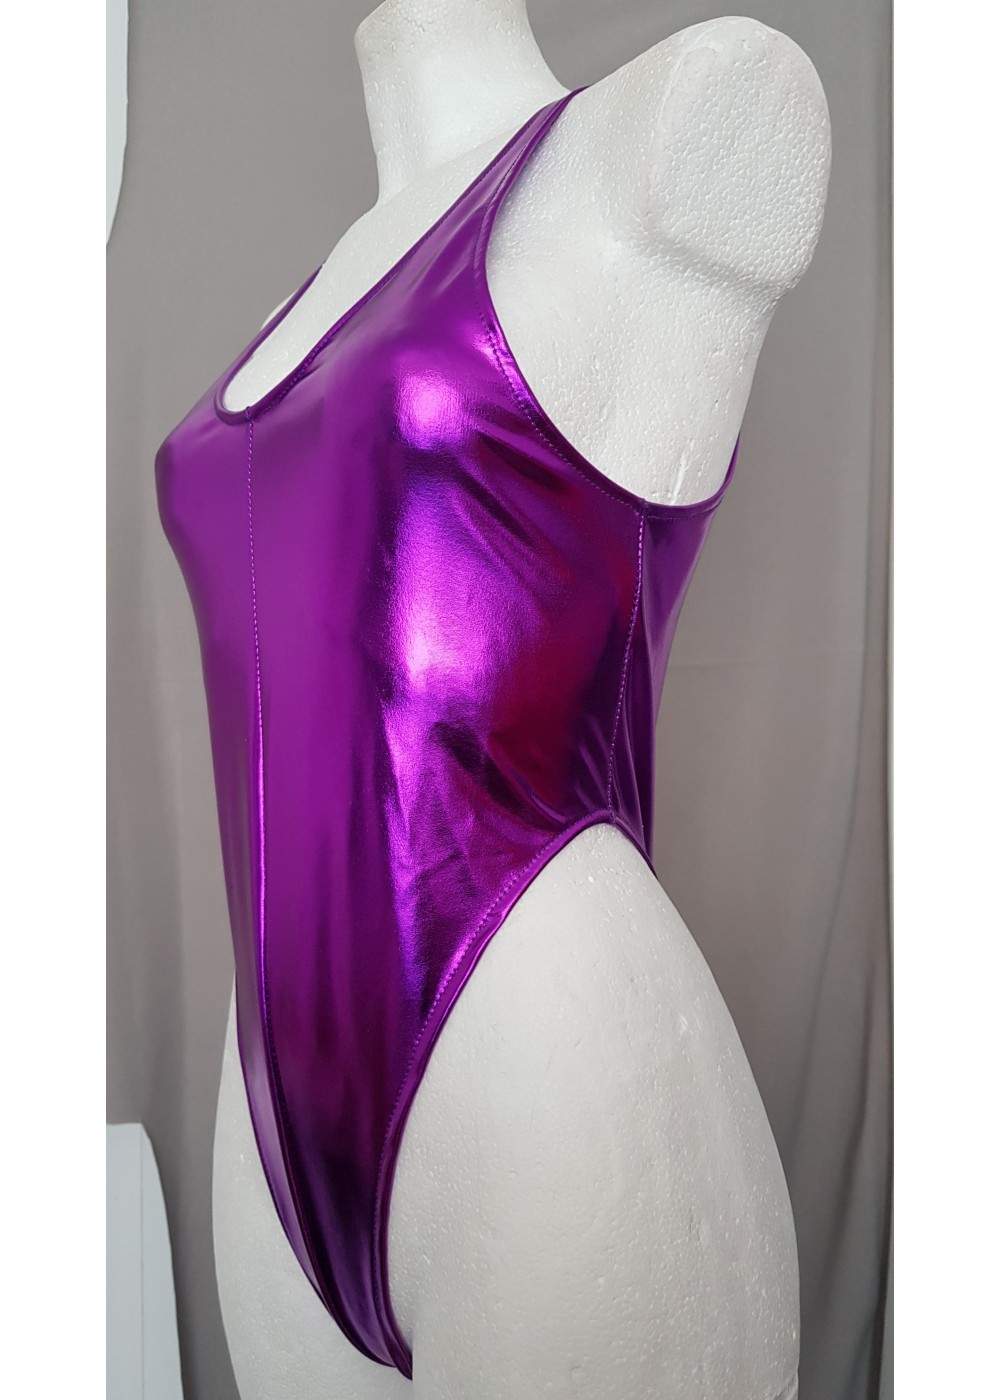 Leder-Optik Wetlook String Body lila online kaufen - 